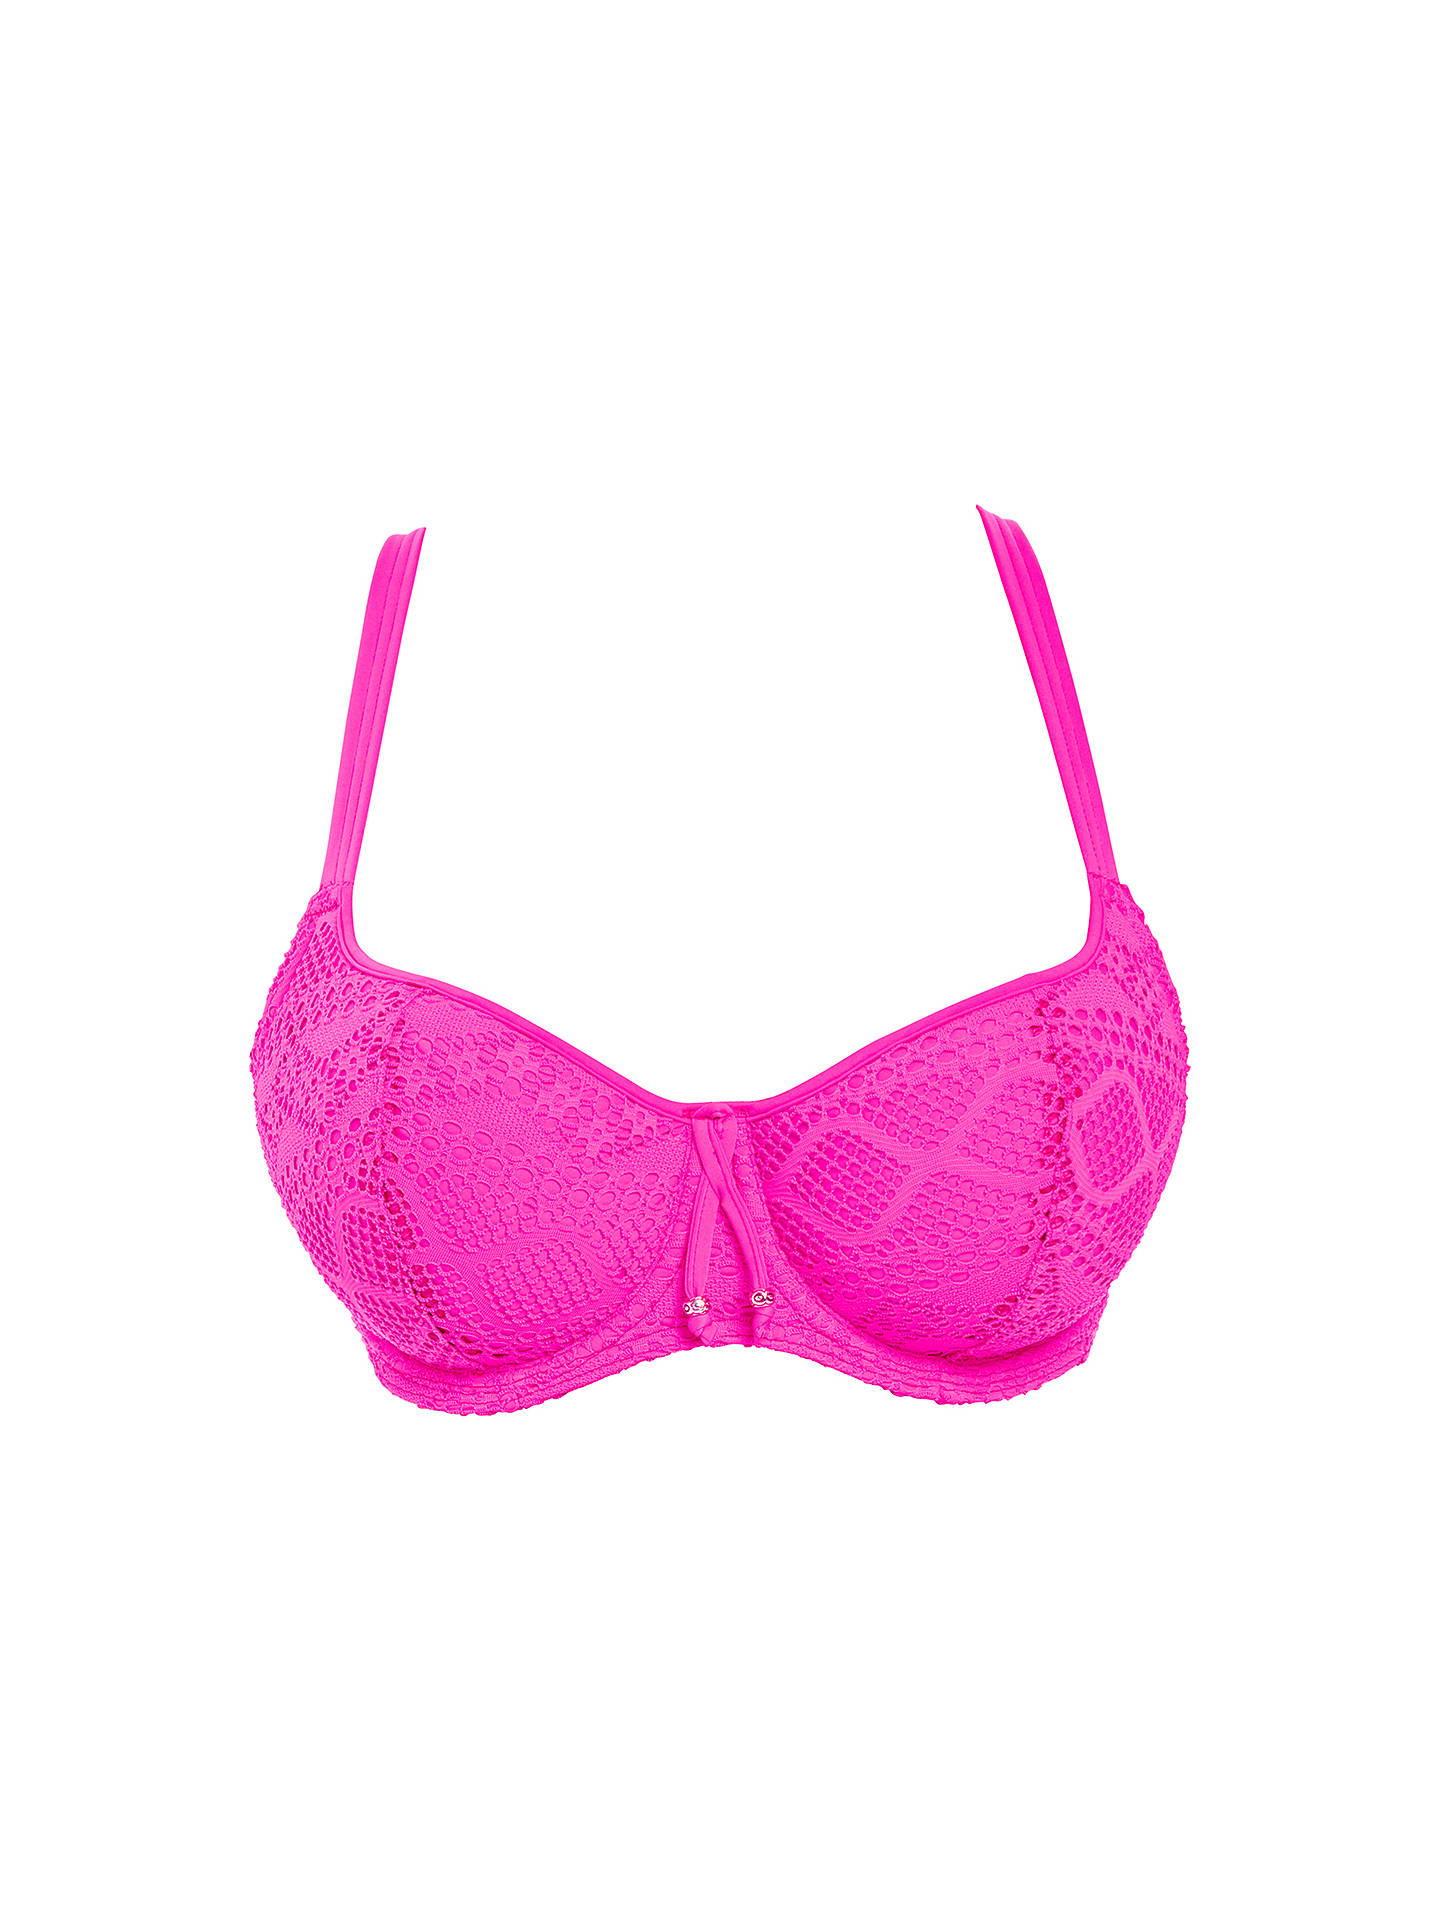 Freya Sundance Underwired Bikini Top, Hot Pink at John Lewis & Partners